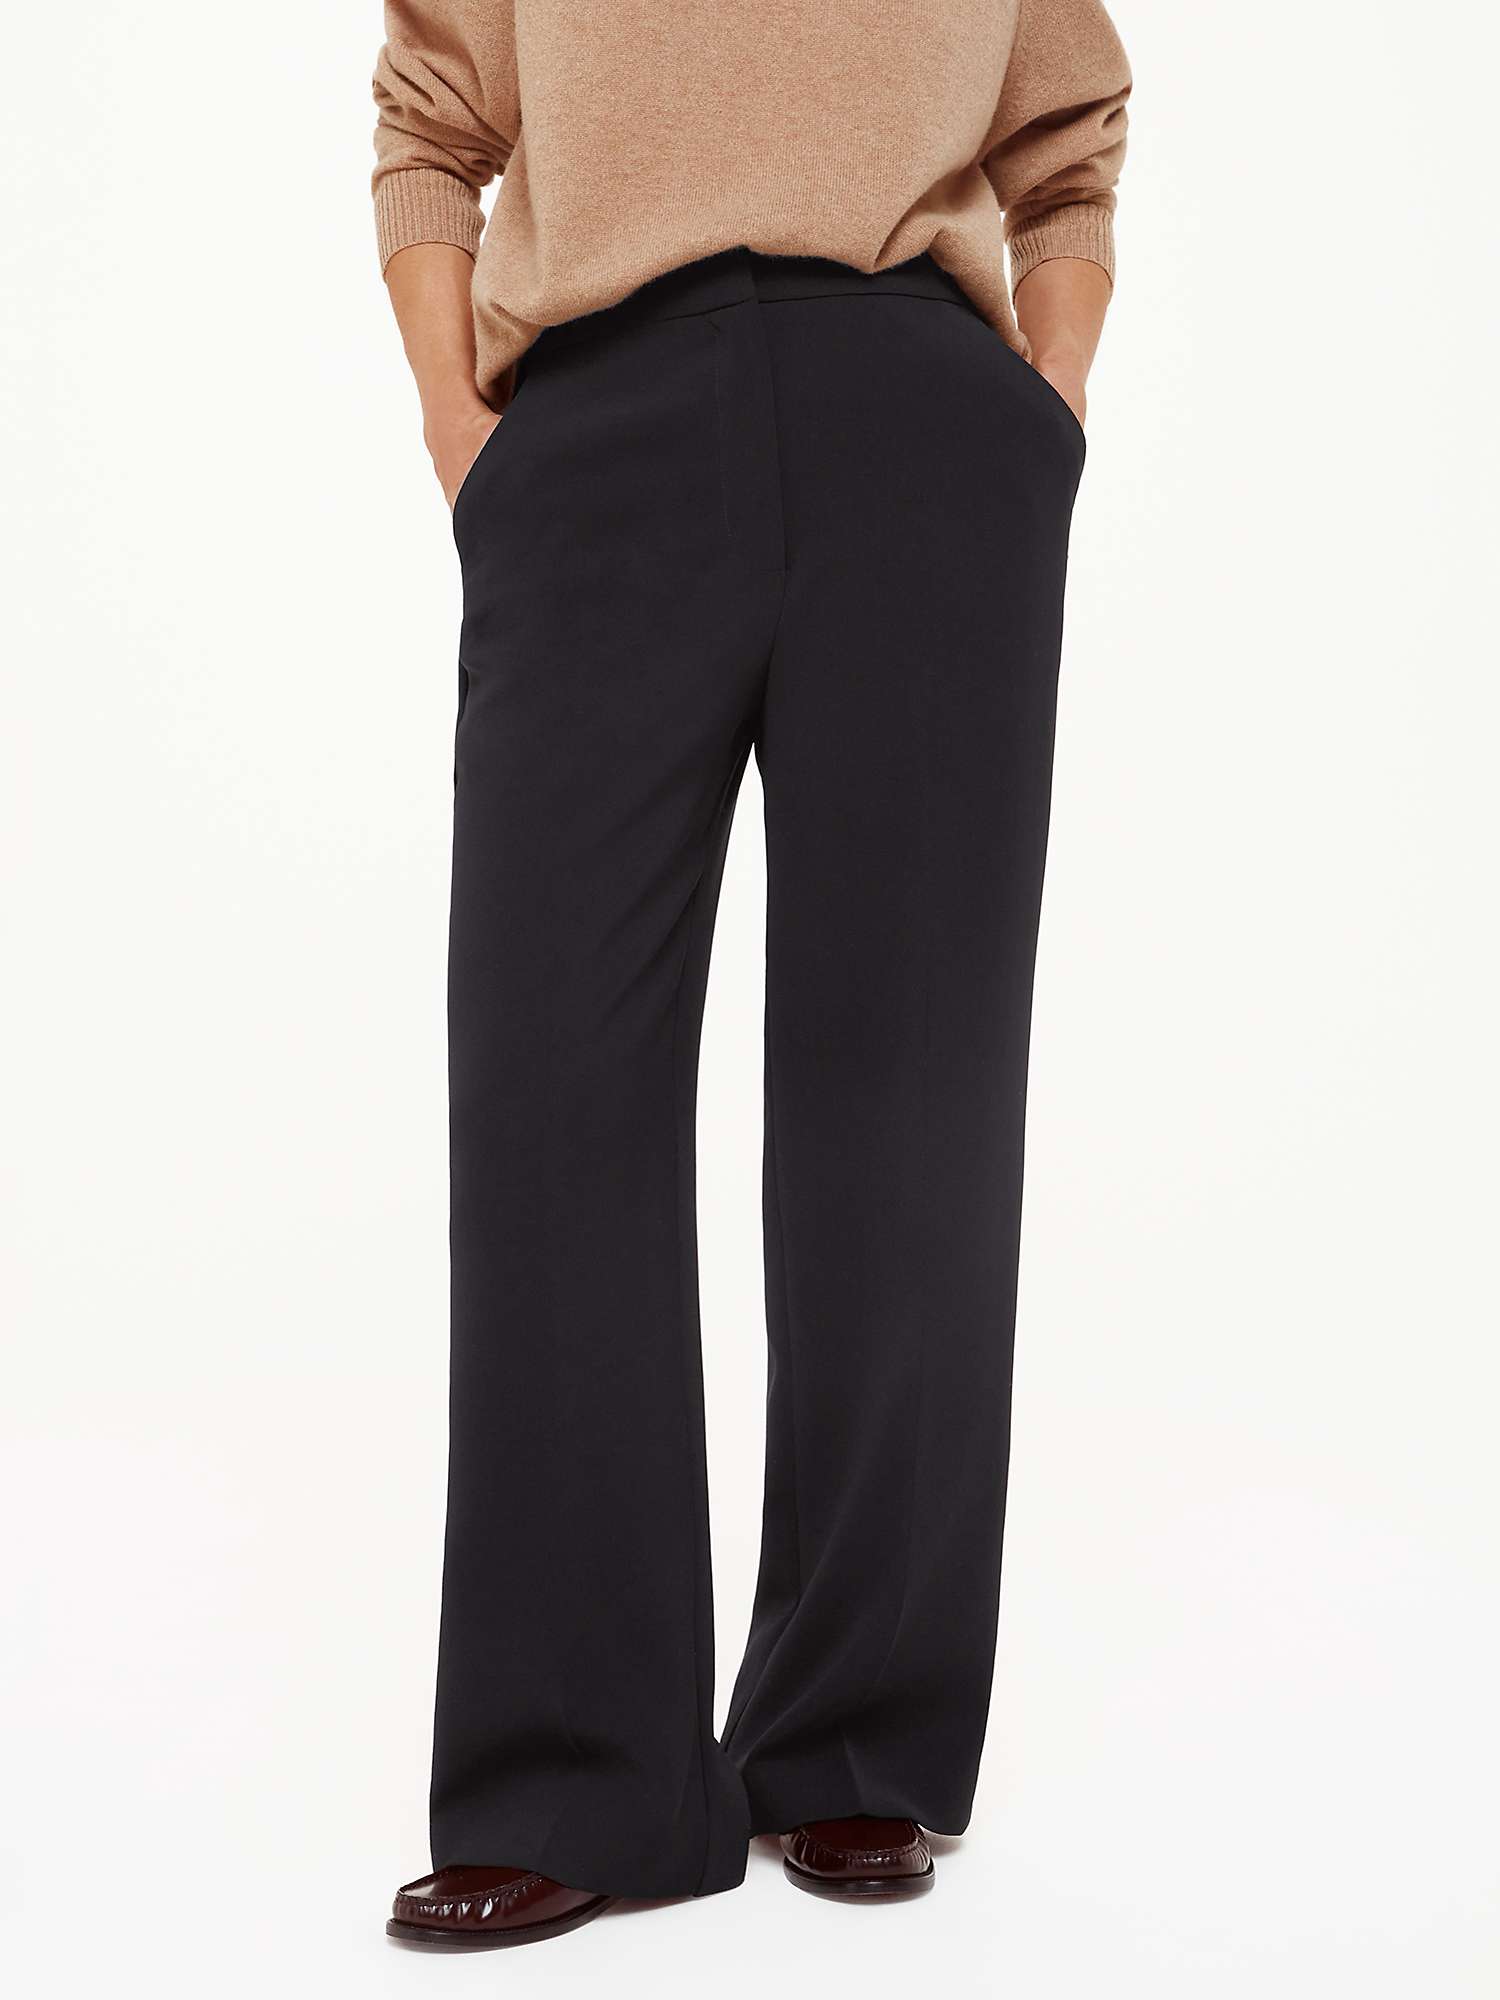 Buy Whistles Petite Ultimate Full Length Trousers, Black Online at johnlewis.com